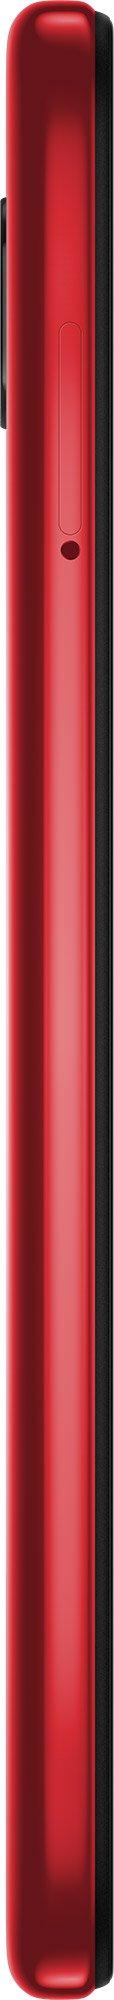 Смартфон Xiaomi Redmi 8 4/64Gb Ruby Red заказать